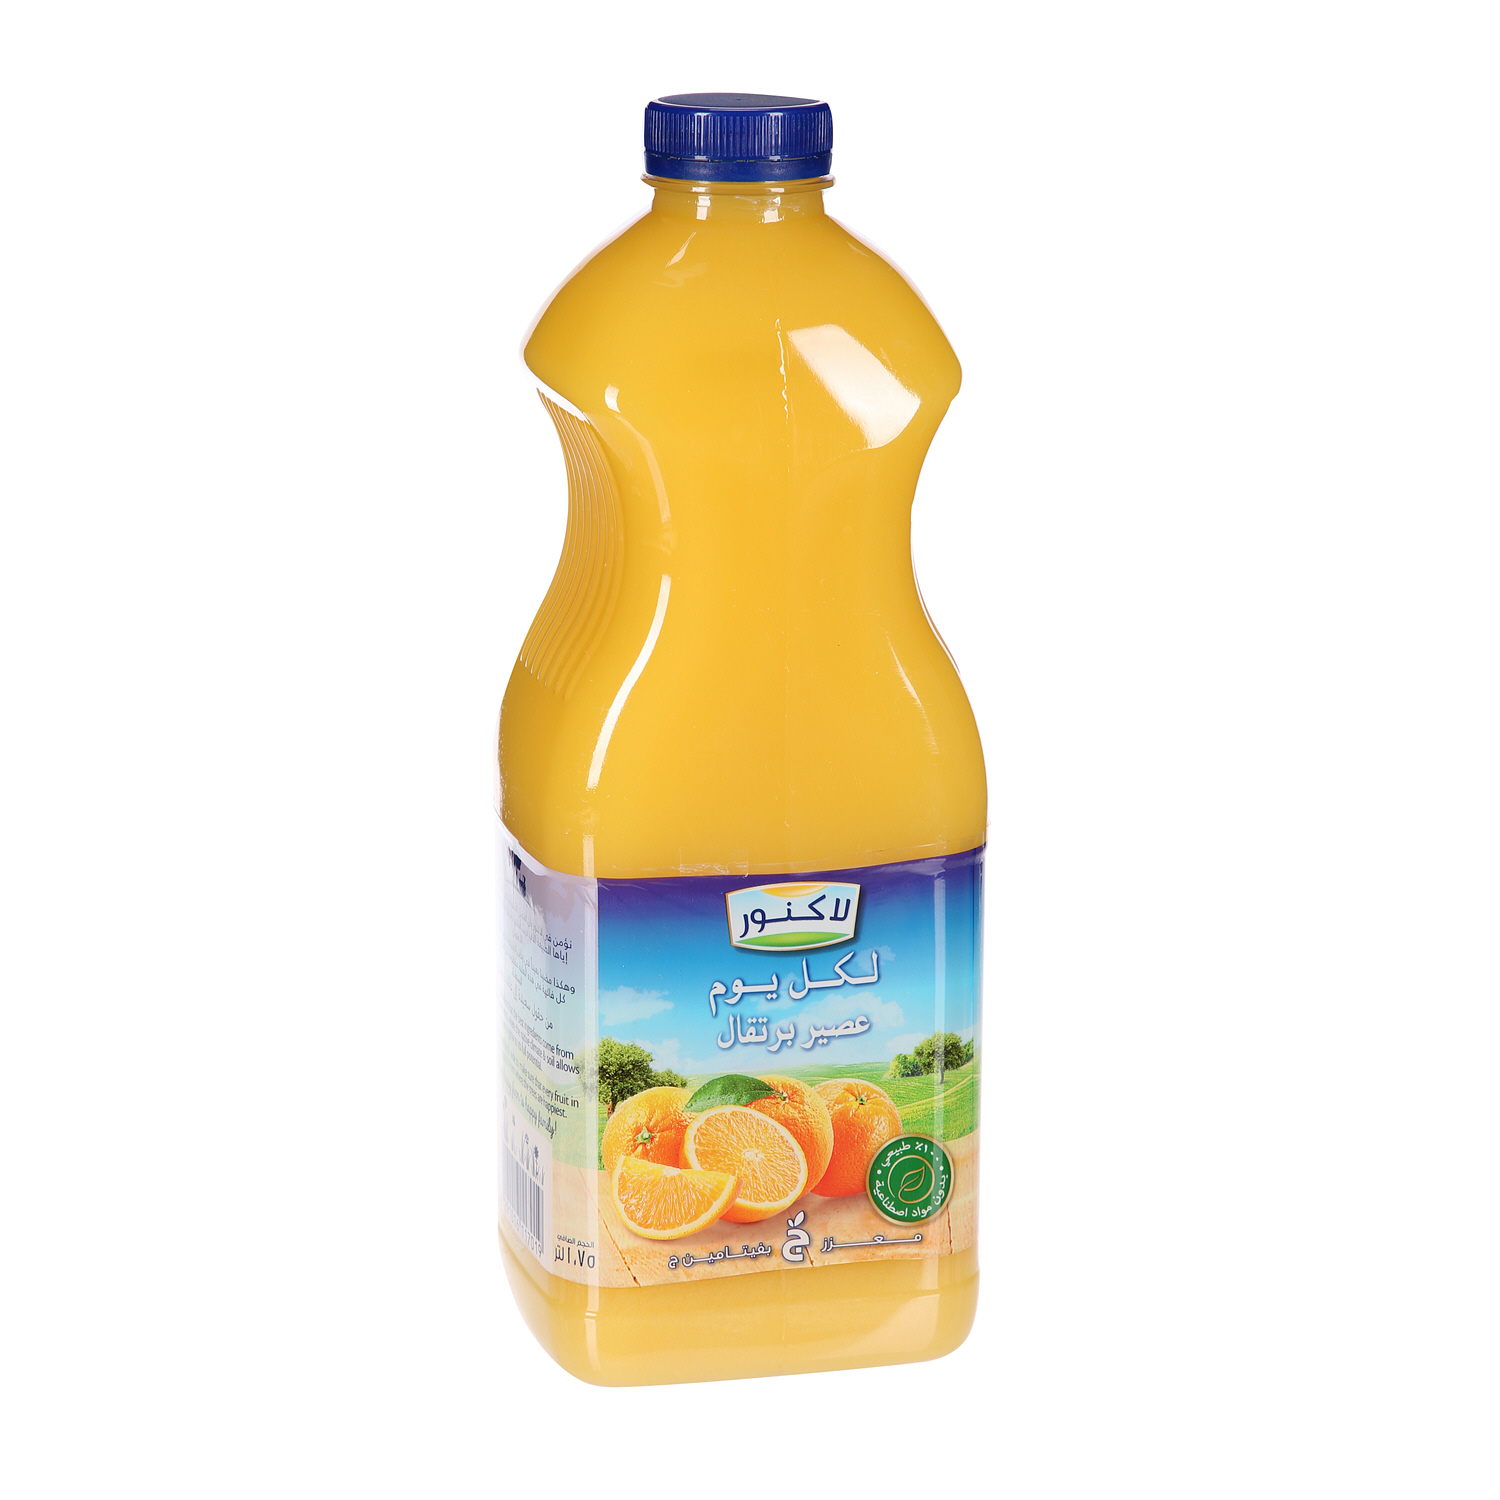 Lacnor Orange Fresh Juice 1.75 L